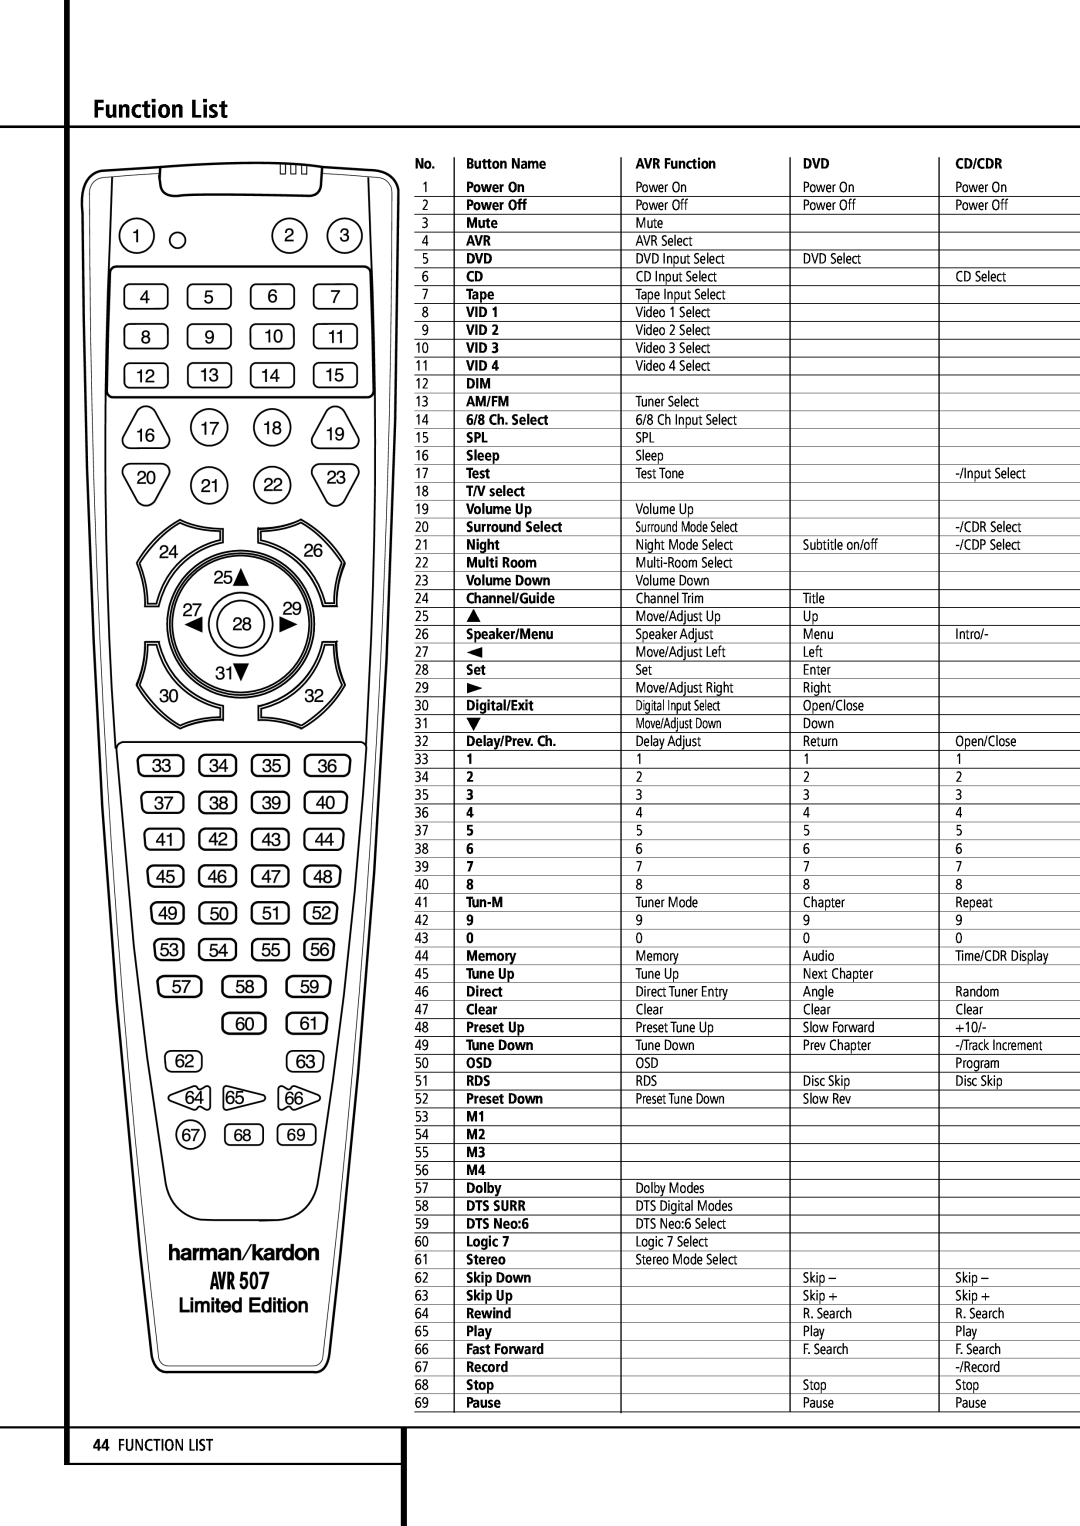 Harman-Kardon AVR507 Function List, Button Name, AVR Function, Cd/Cdr, Power On, Power Off, Mute, Tape, Am/Fm, Sleep, Test 